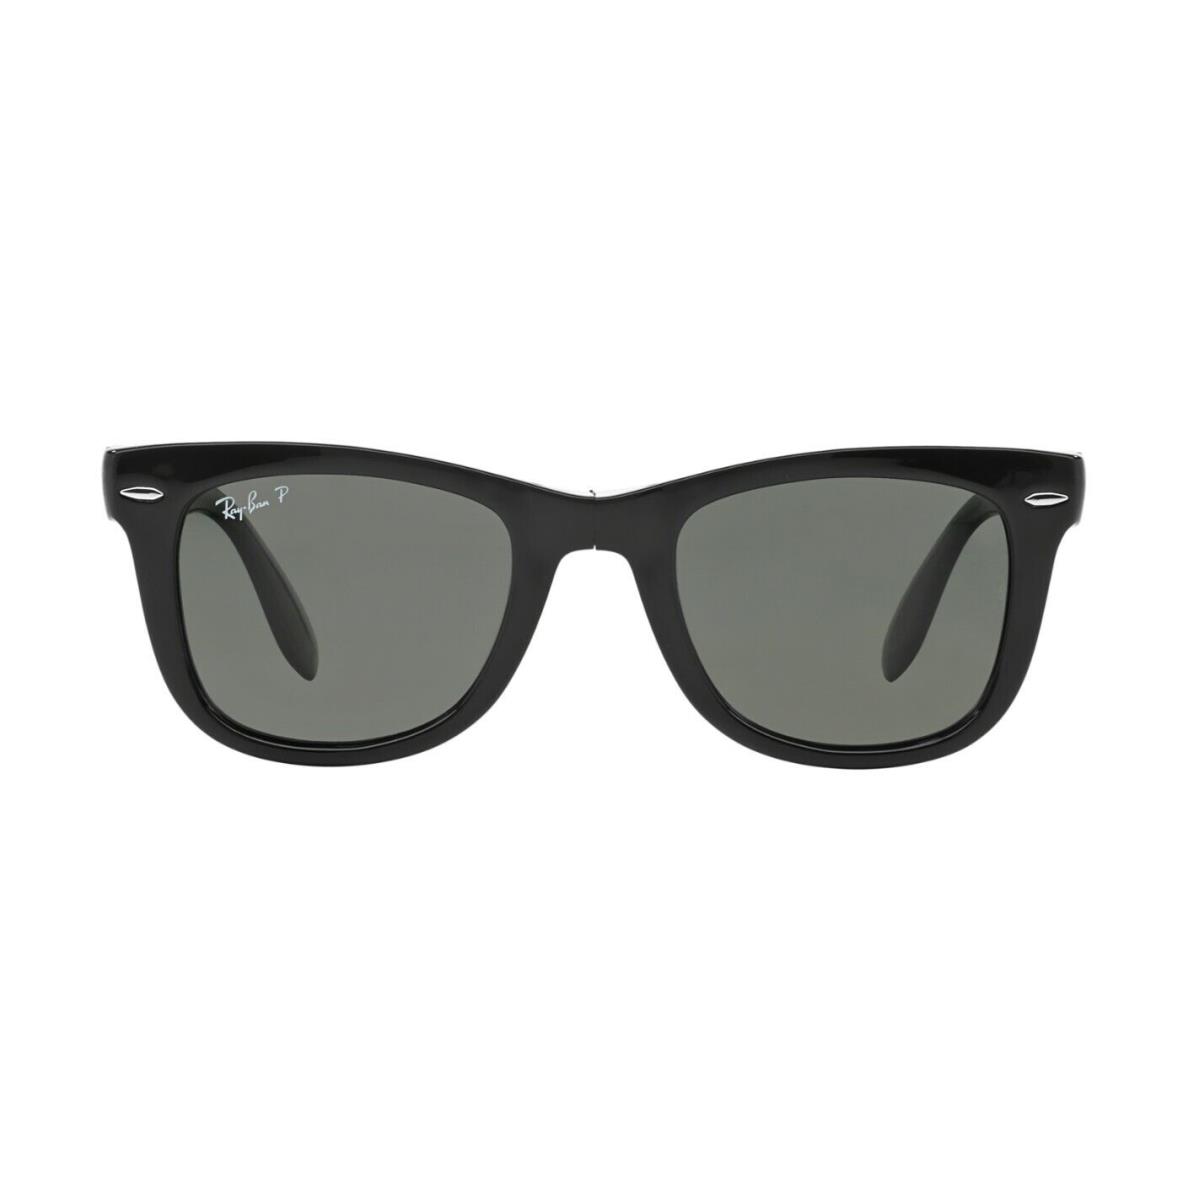 Ray-ban Wayfarer Folding RB 4105 Black/G-15 Classic Green Polarized Sunglasses